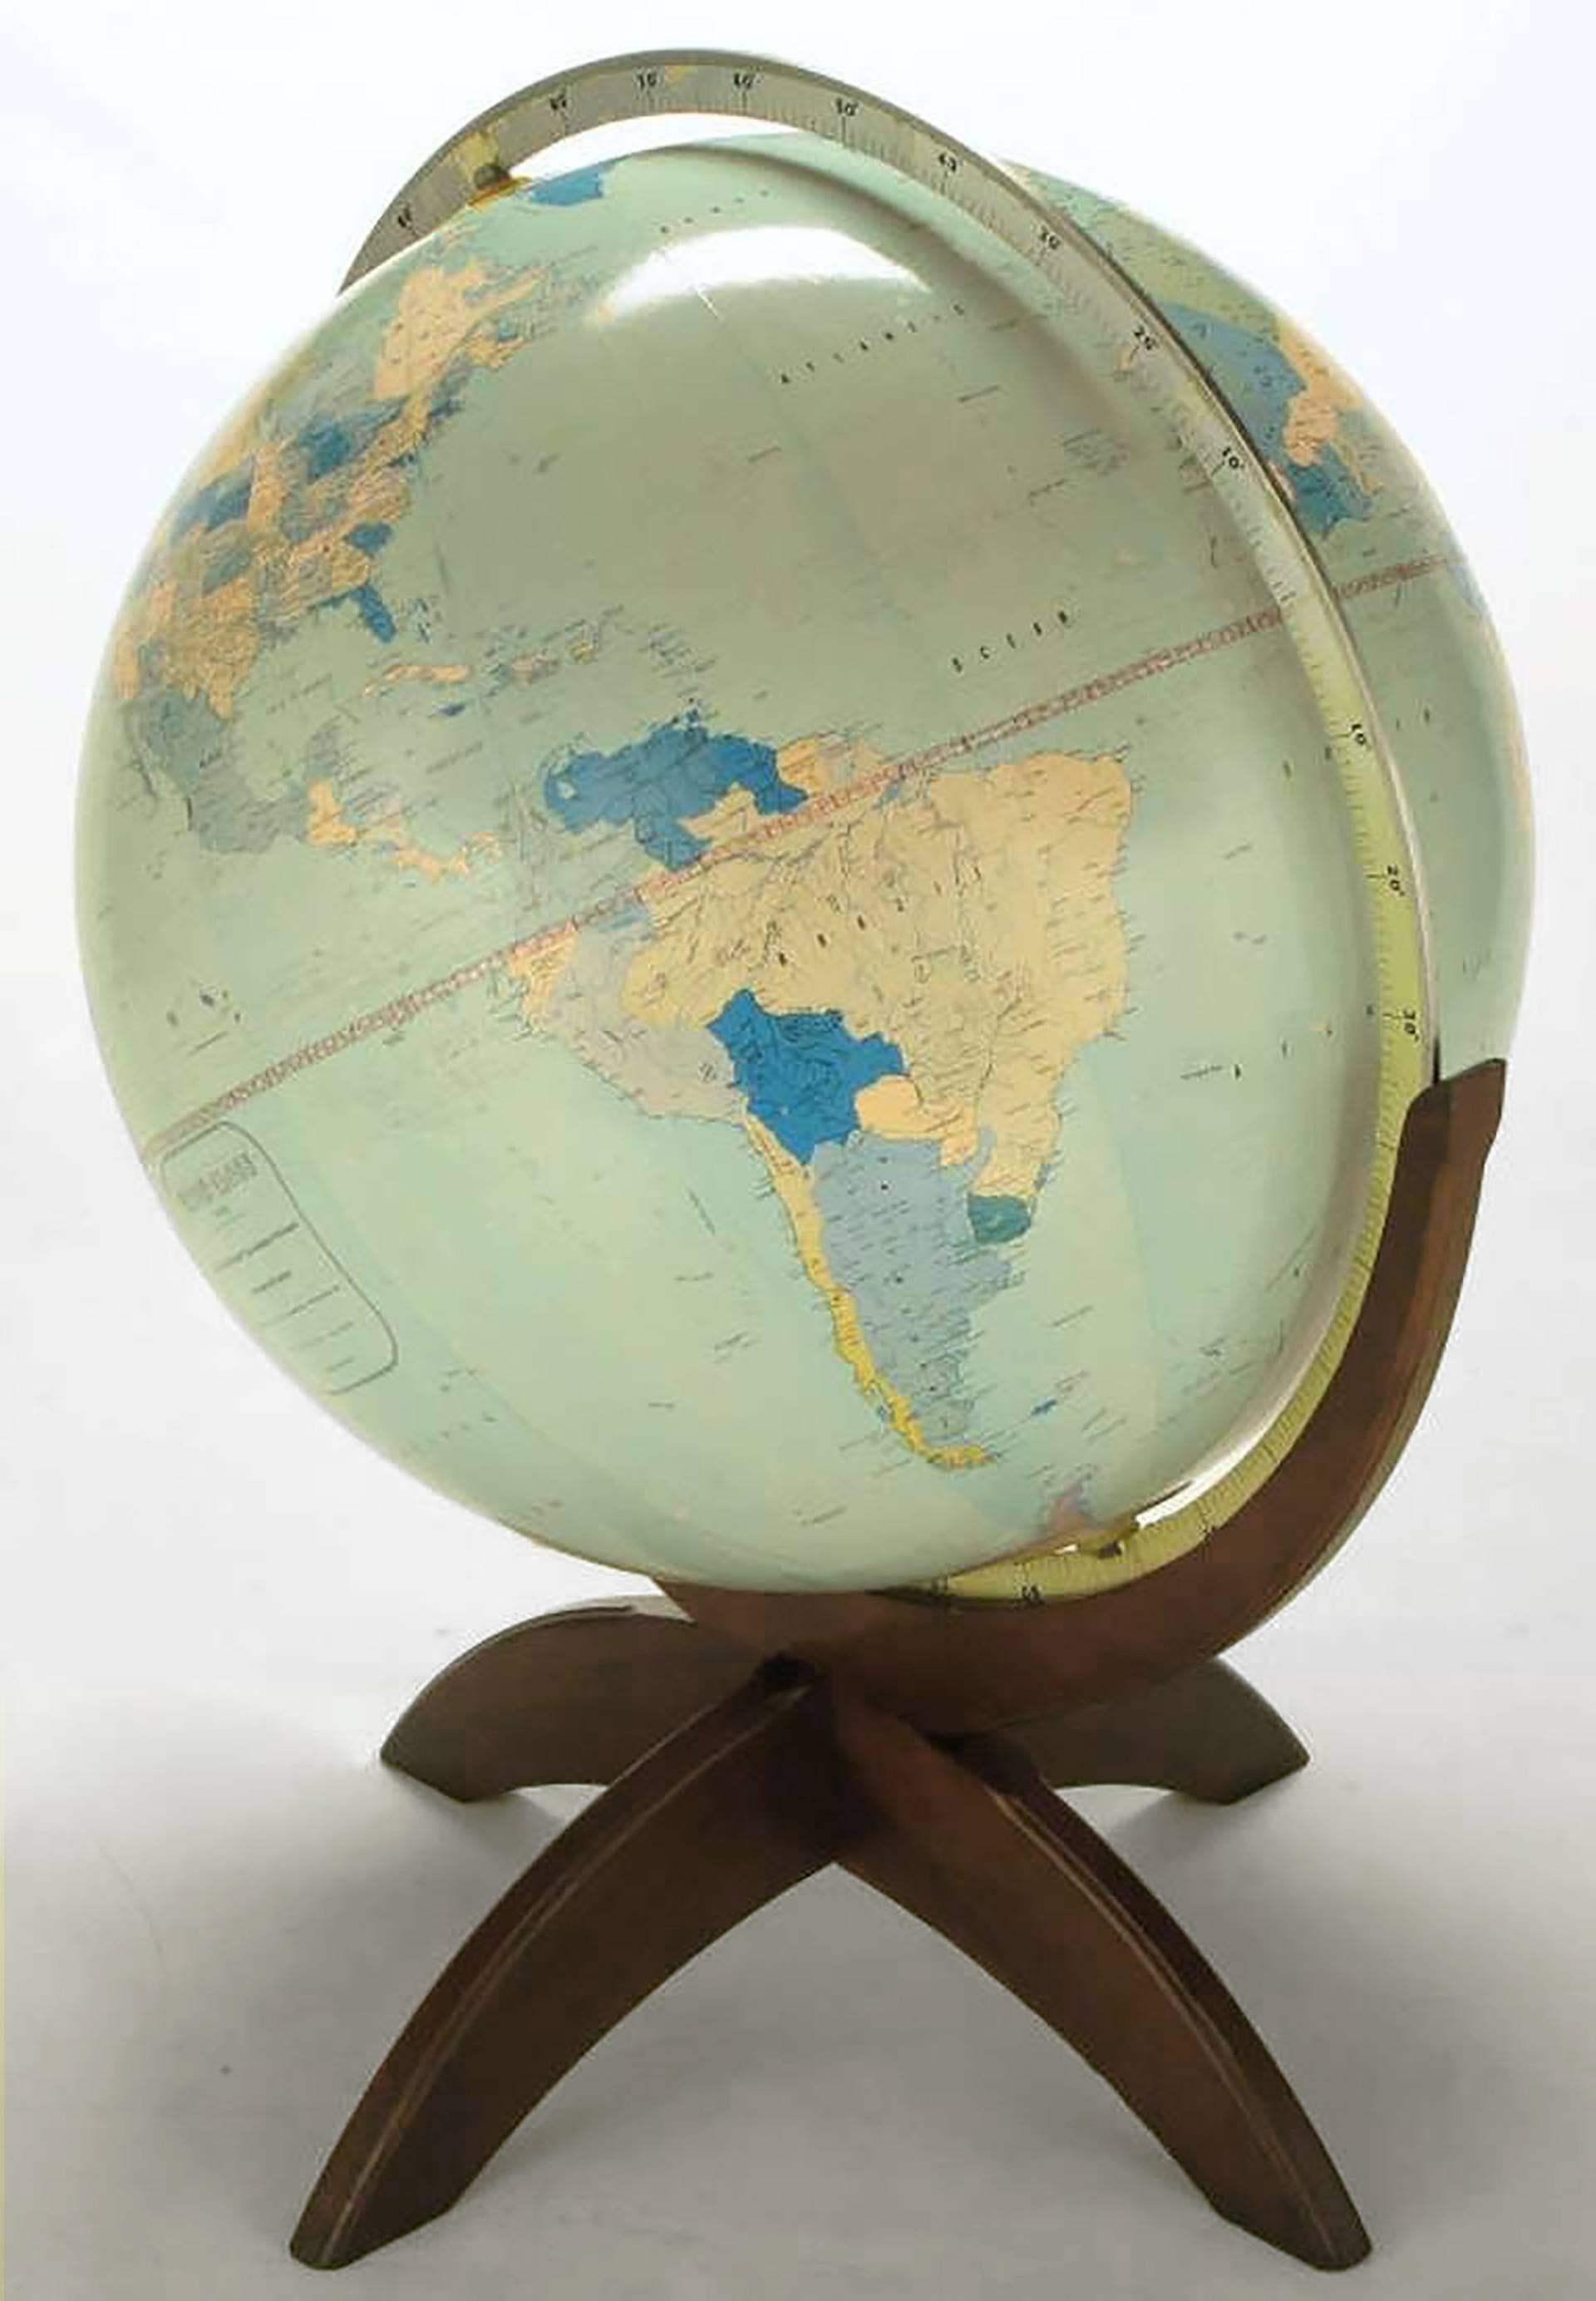 Large rotating globe measures 34